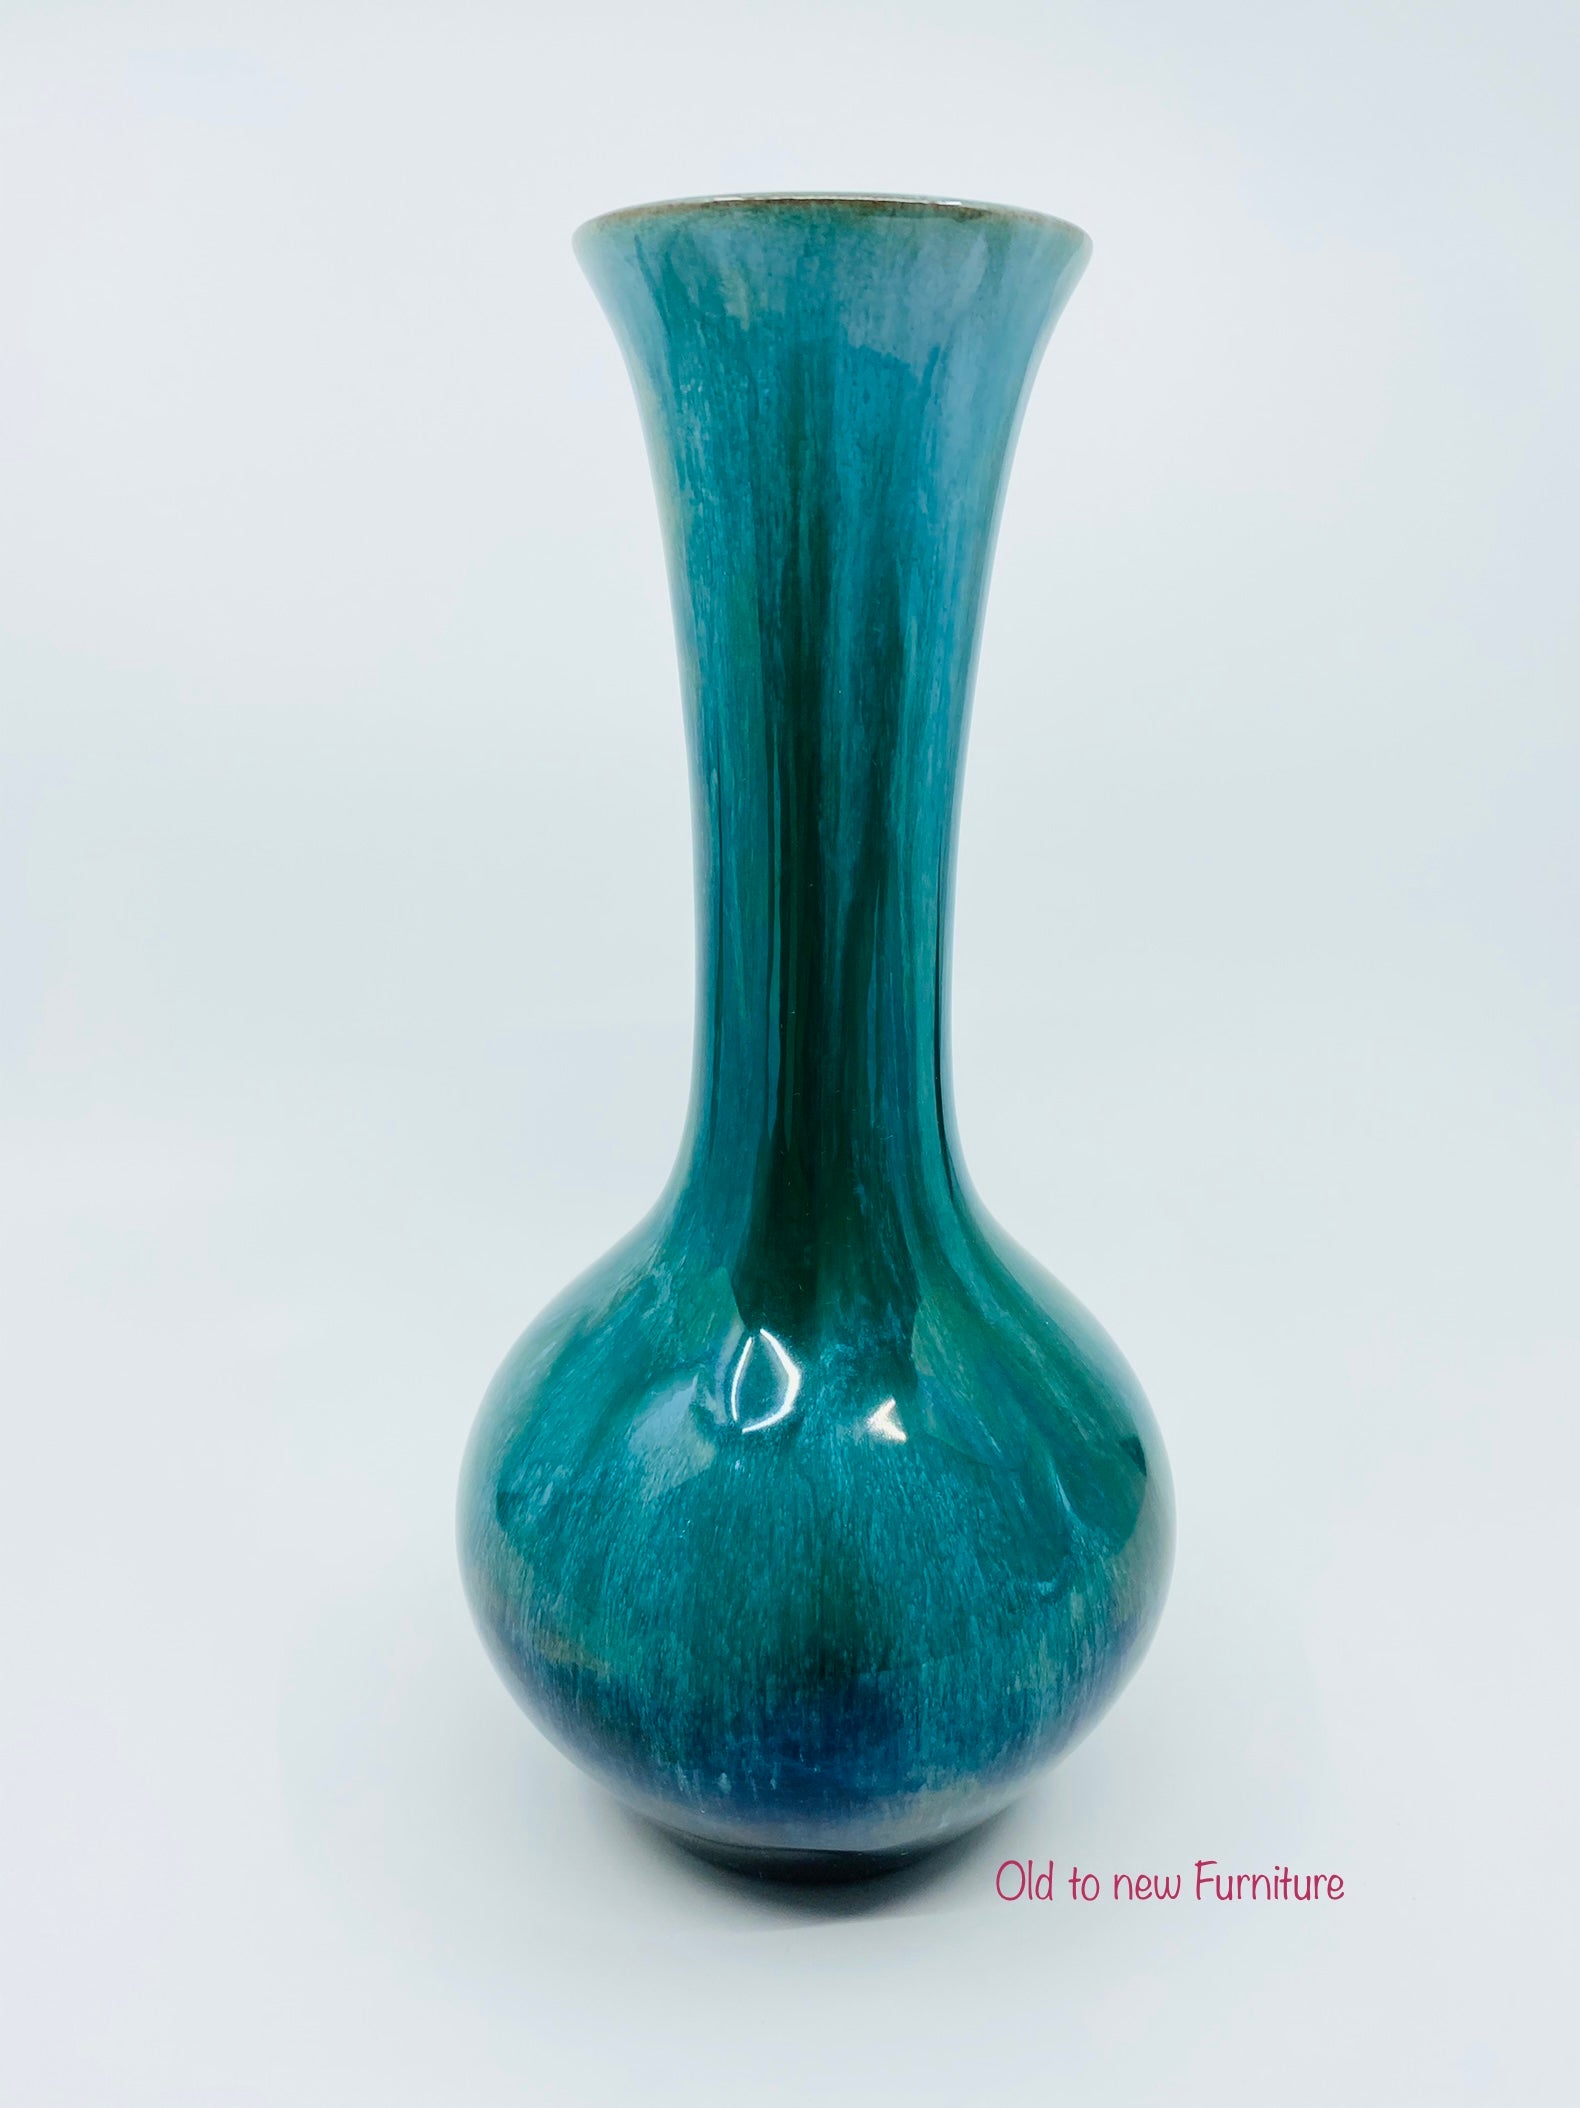 Buy Blue Pottery Shades of Glazed Bud Vase – Old to New Furniture